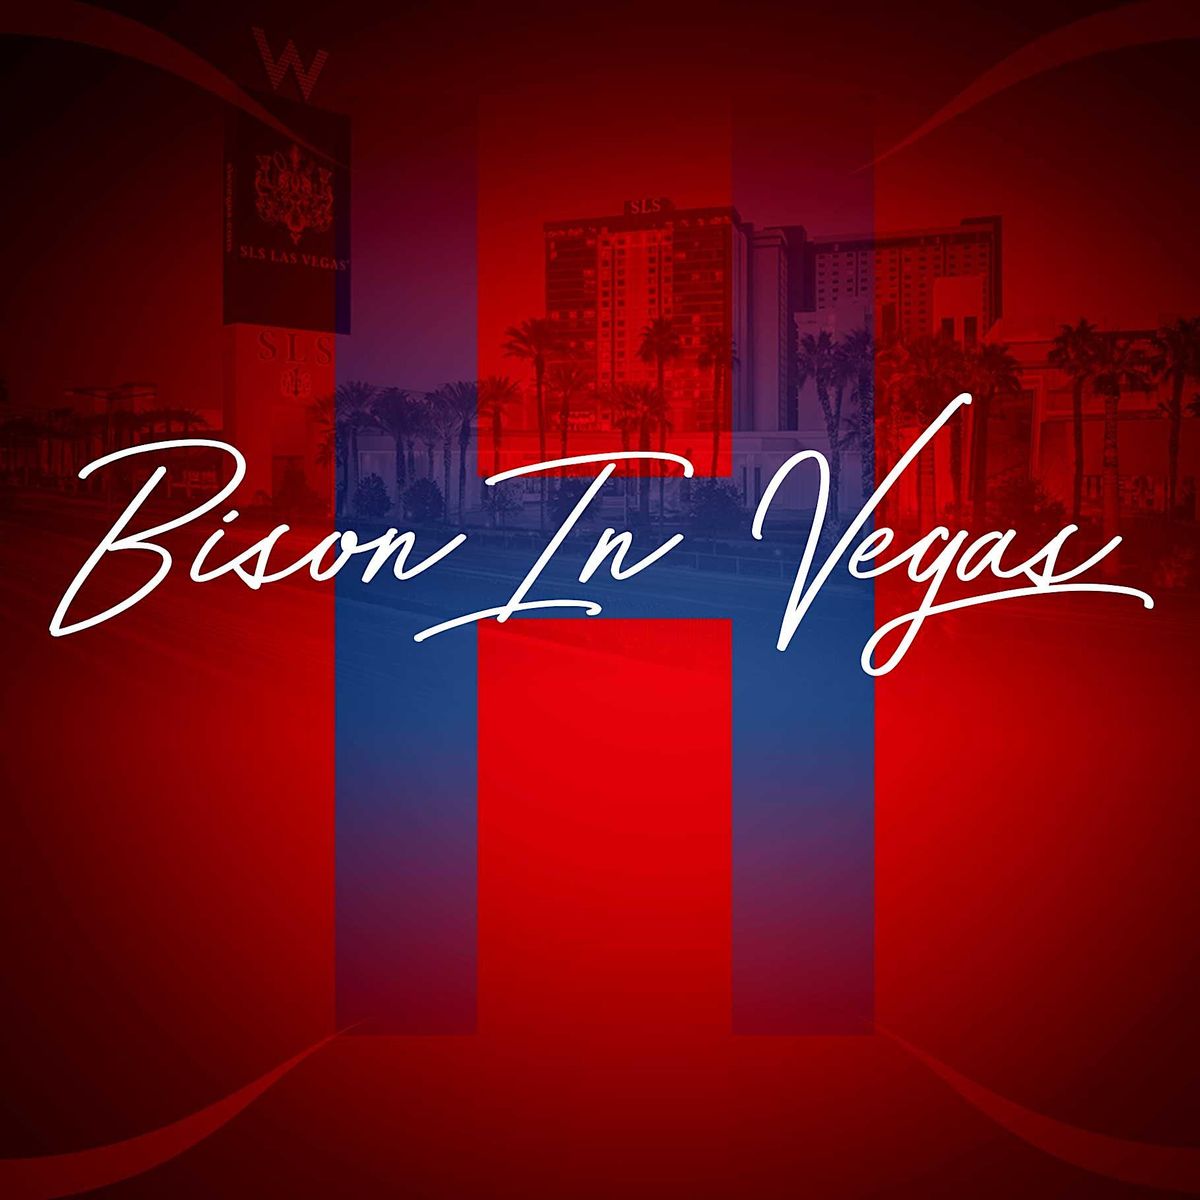 Bison In Vegas HBCU Alumni Brunch